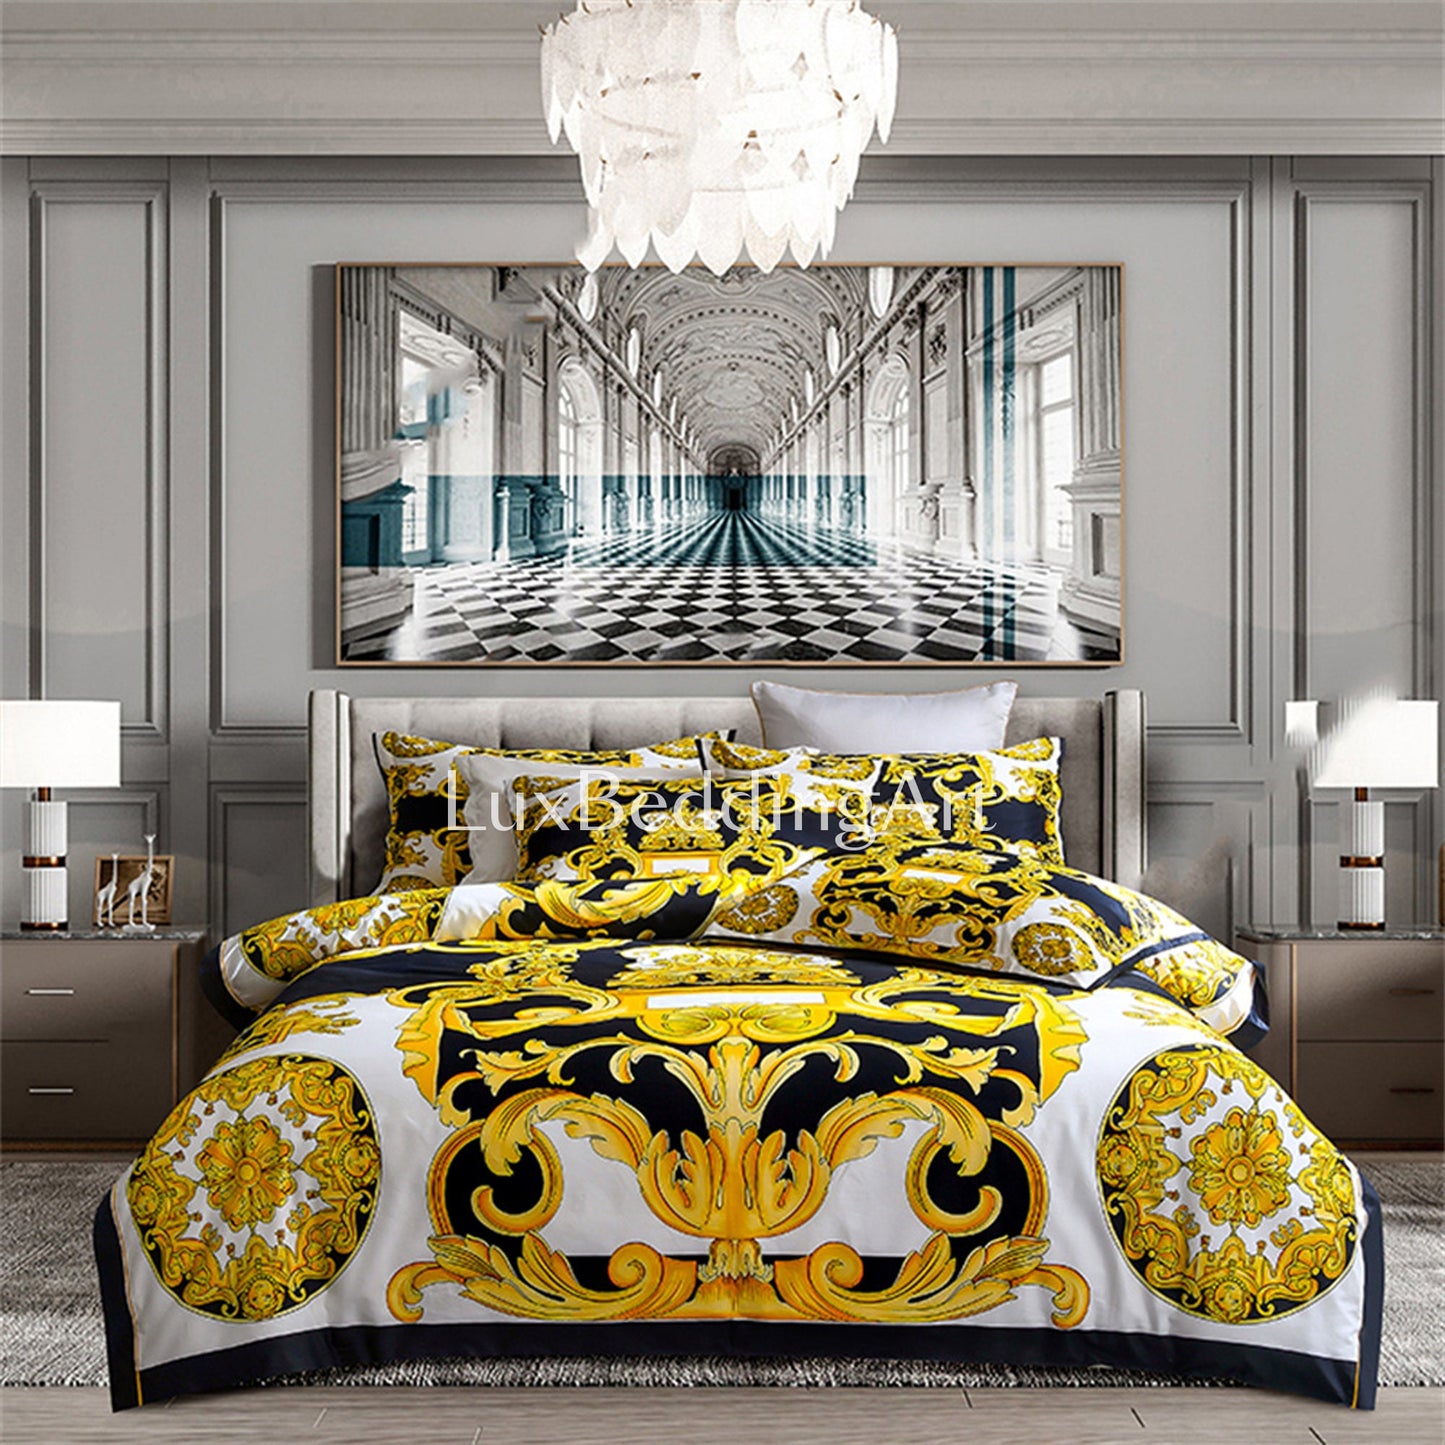 Luxury Elegant Egyptian Cotton Baroque design Silky Soft Bedding Set • Duvet Cover Set • Bed Sheet • Pillowcases